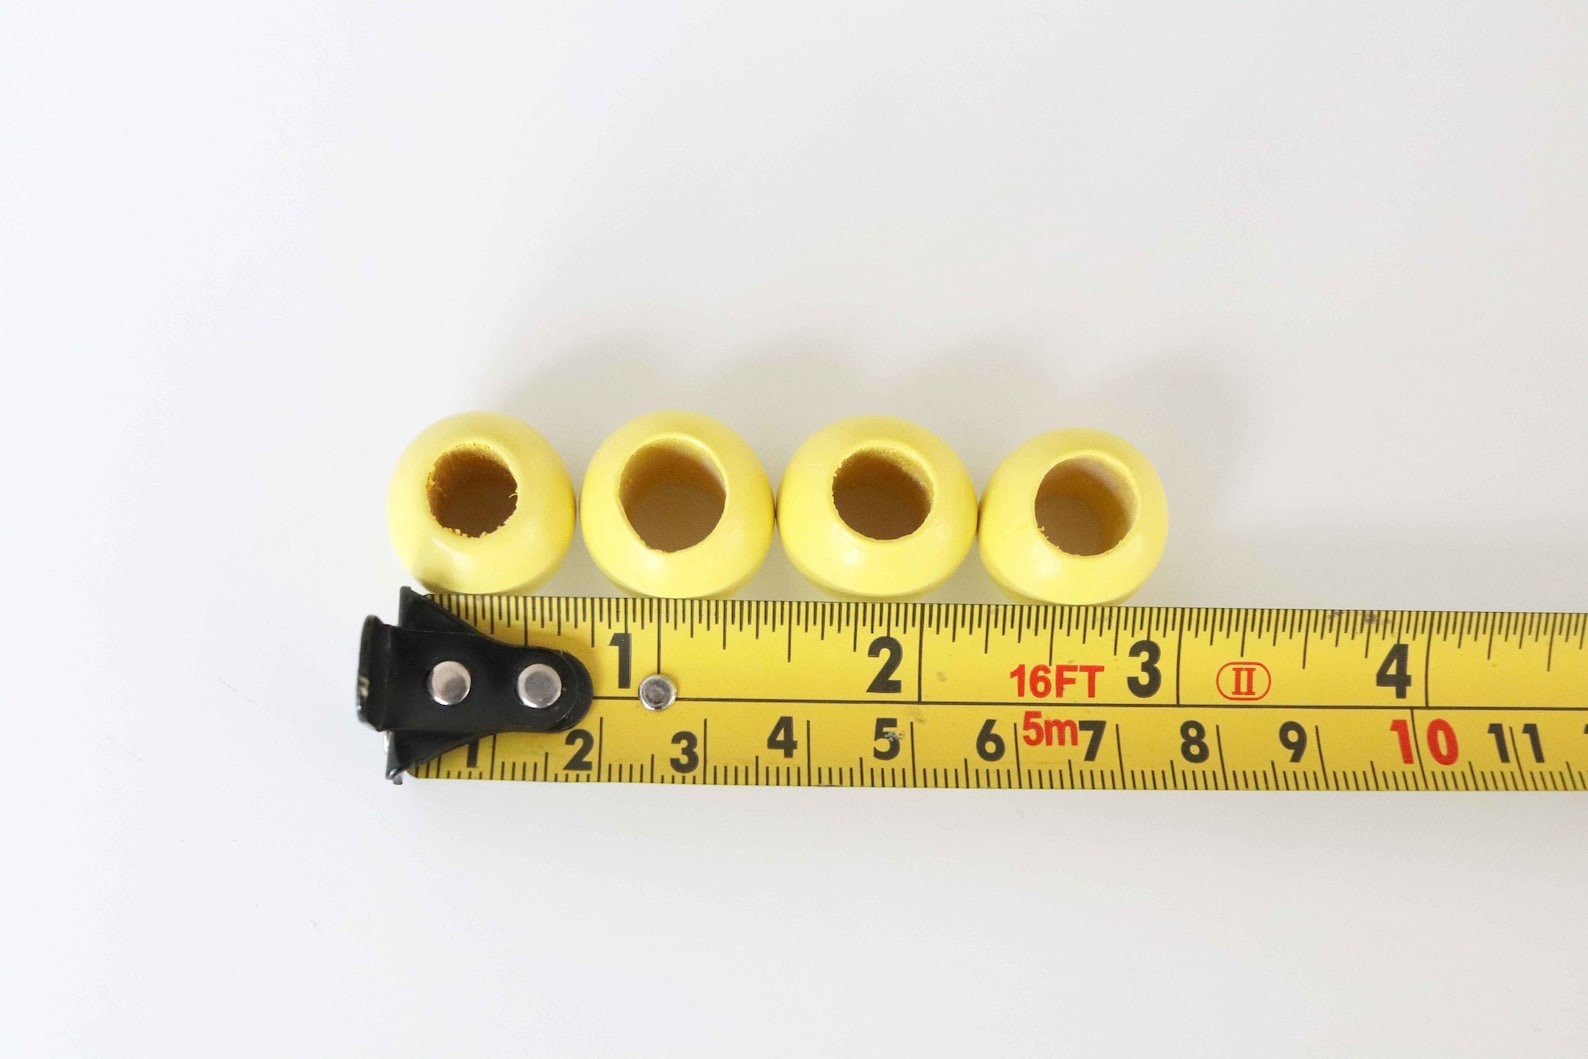 large hole macrame beads with a tape measure